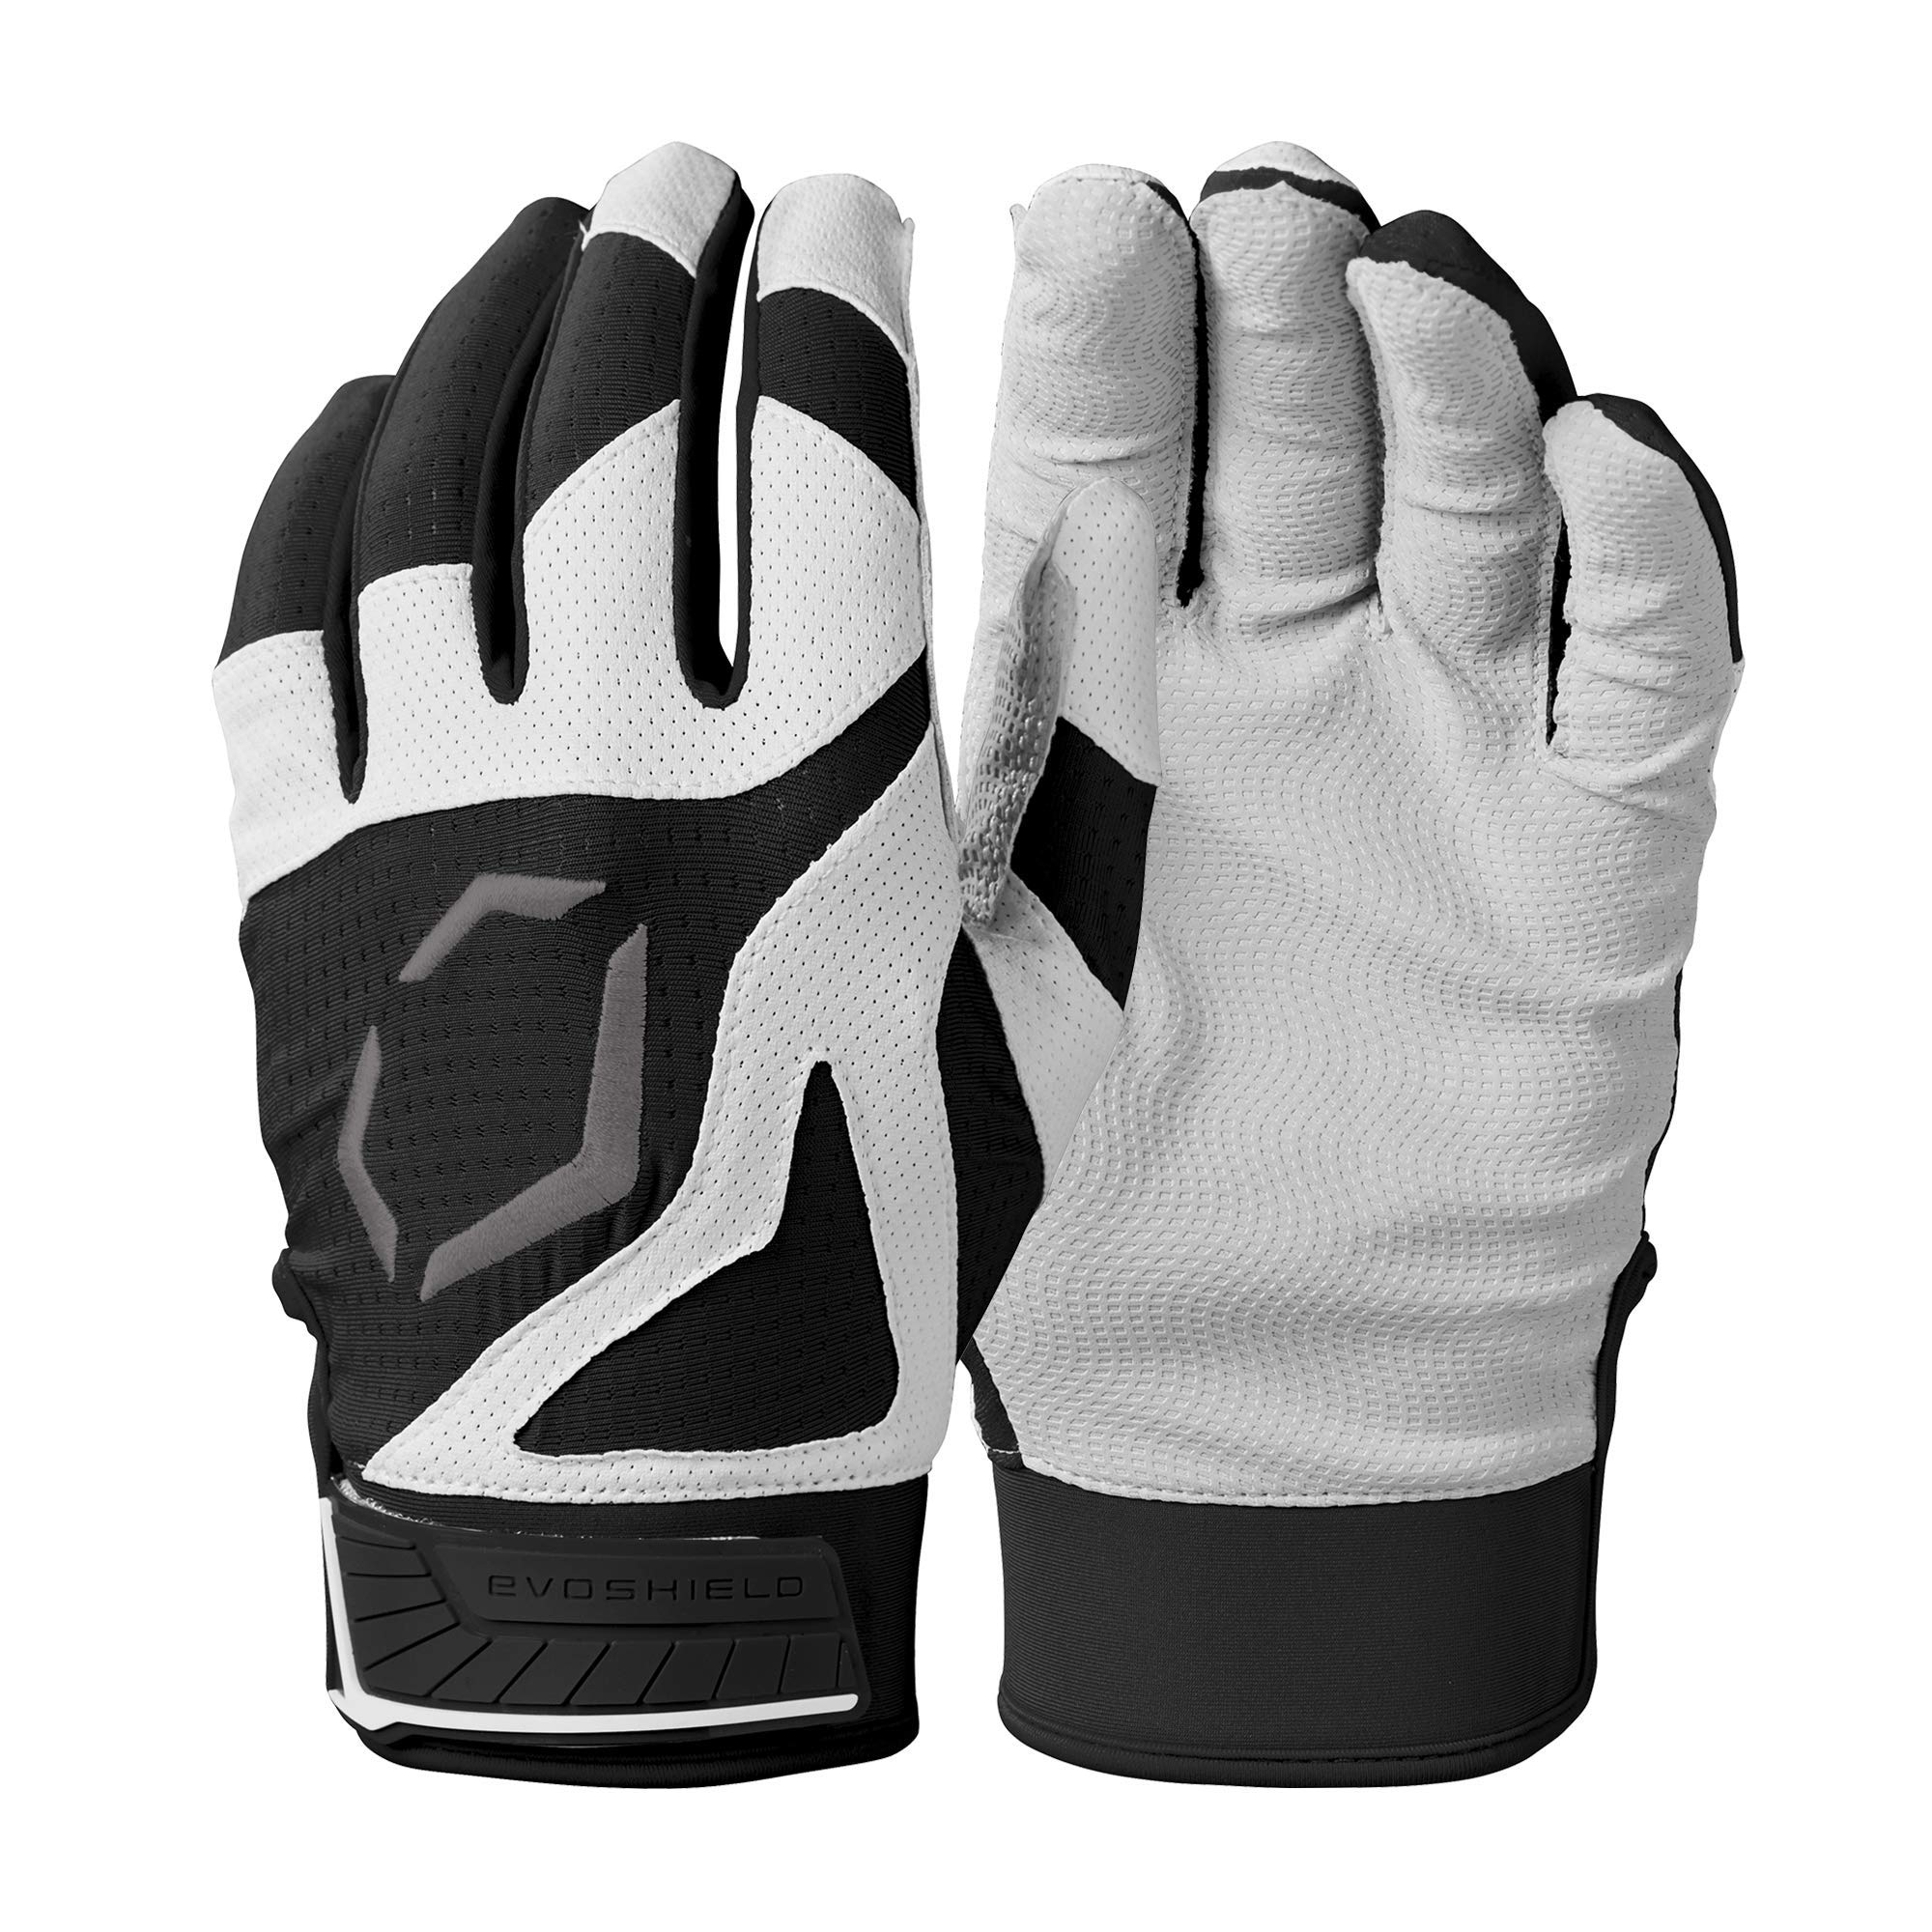 Evoshield Srz 1 Batting Glove - Black, 2X Large